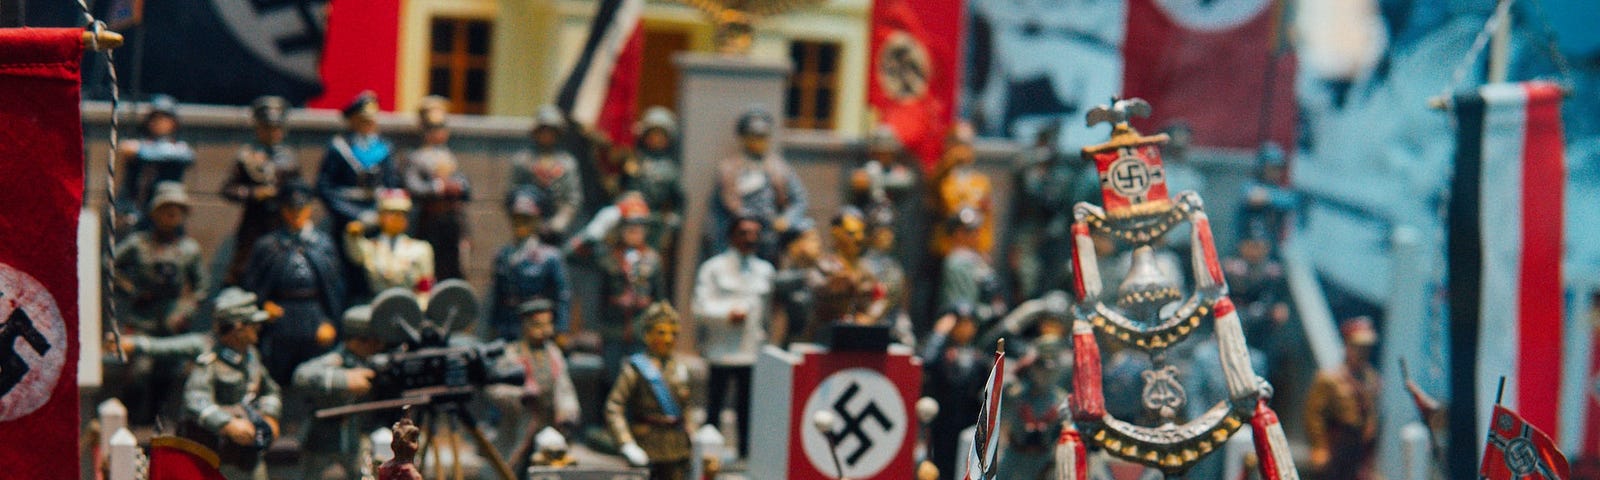 Nazi salutes to Hitler